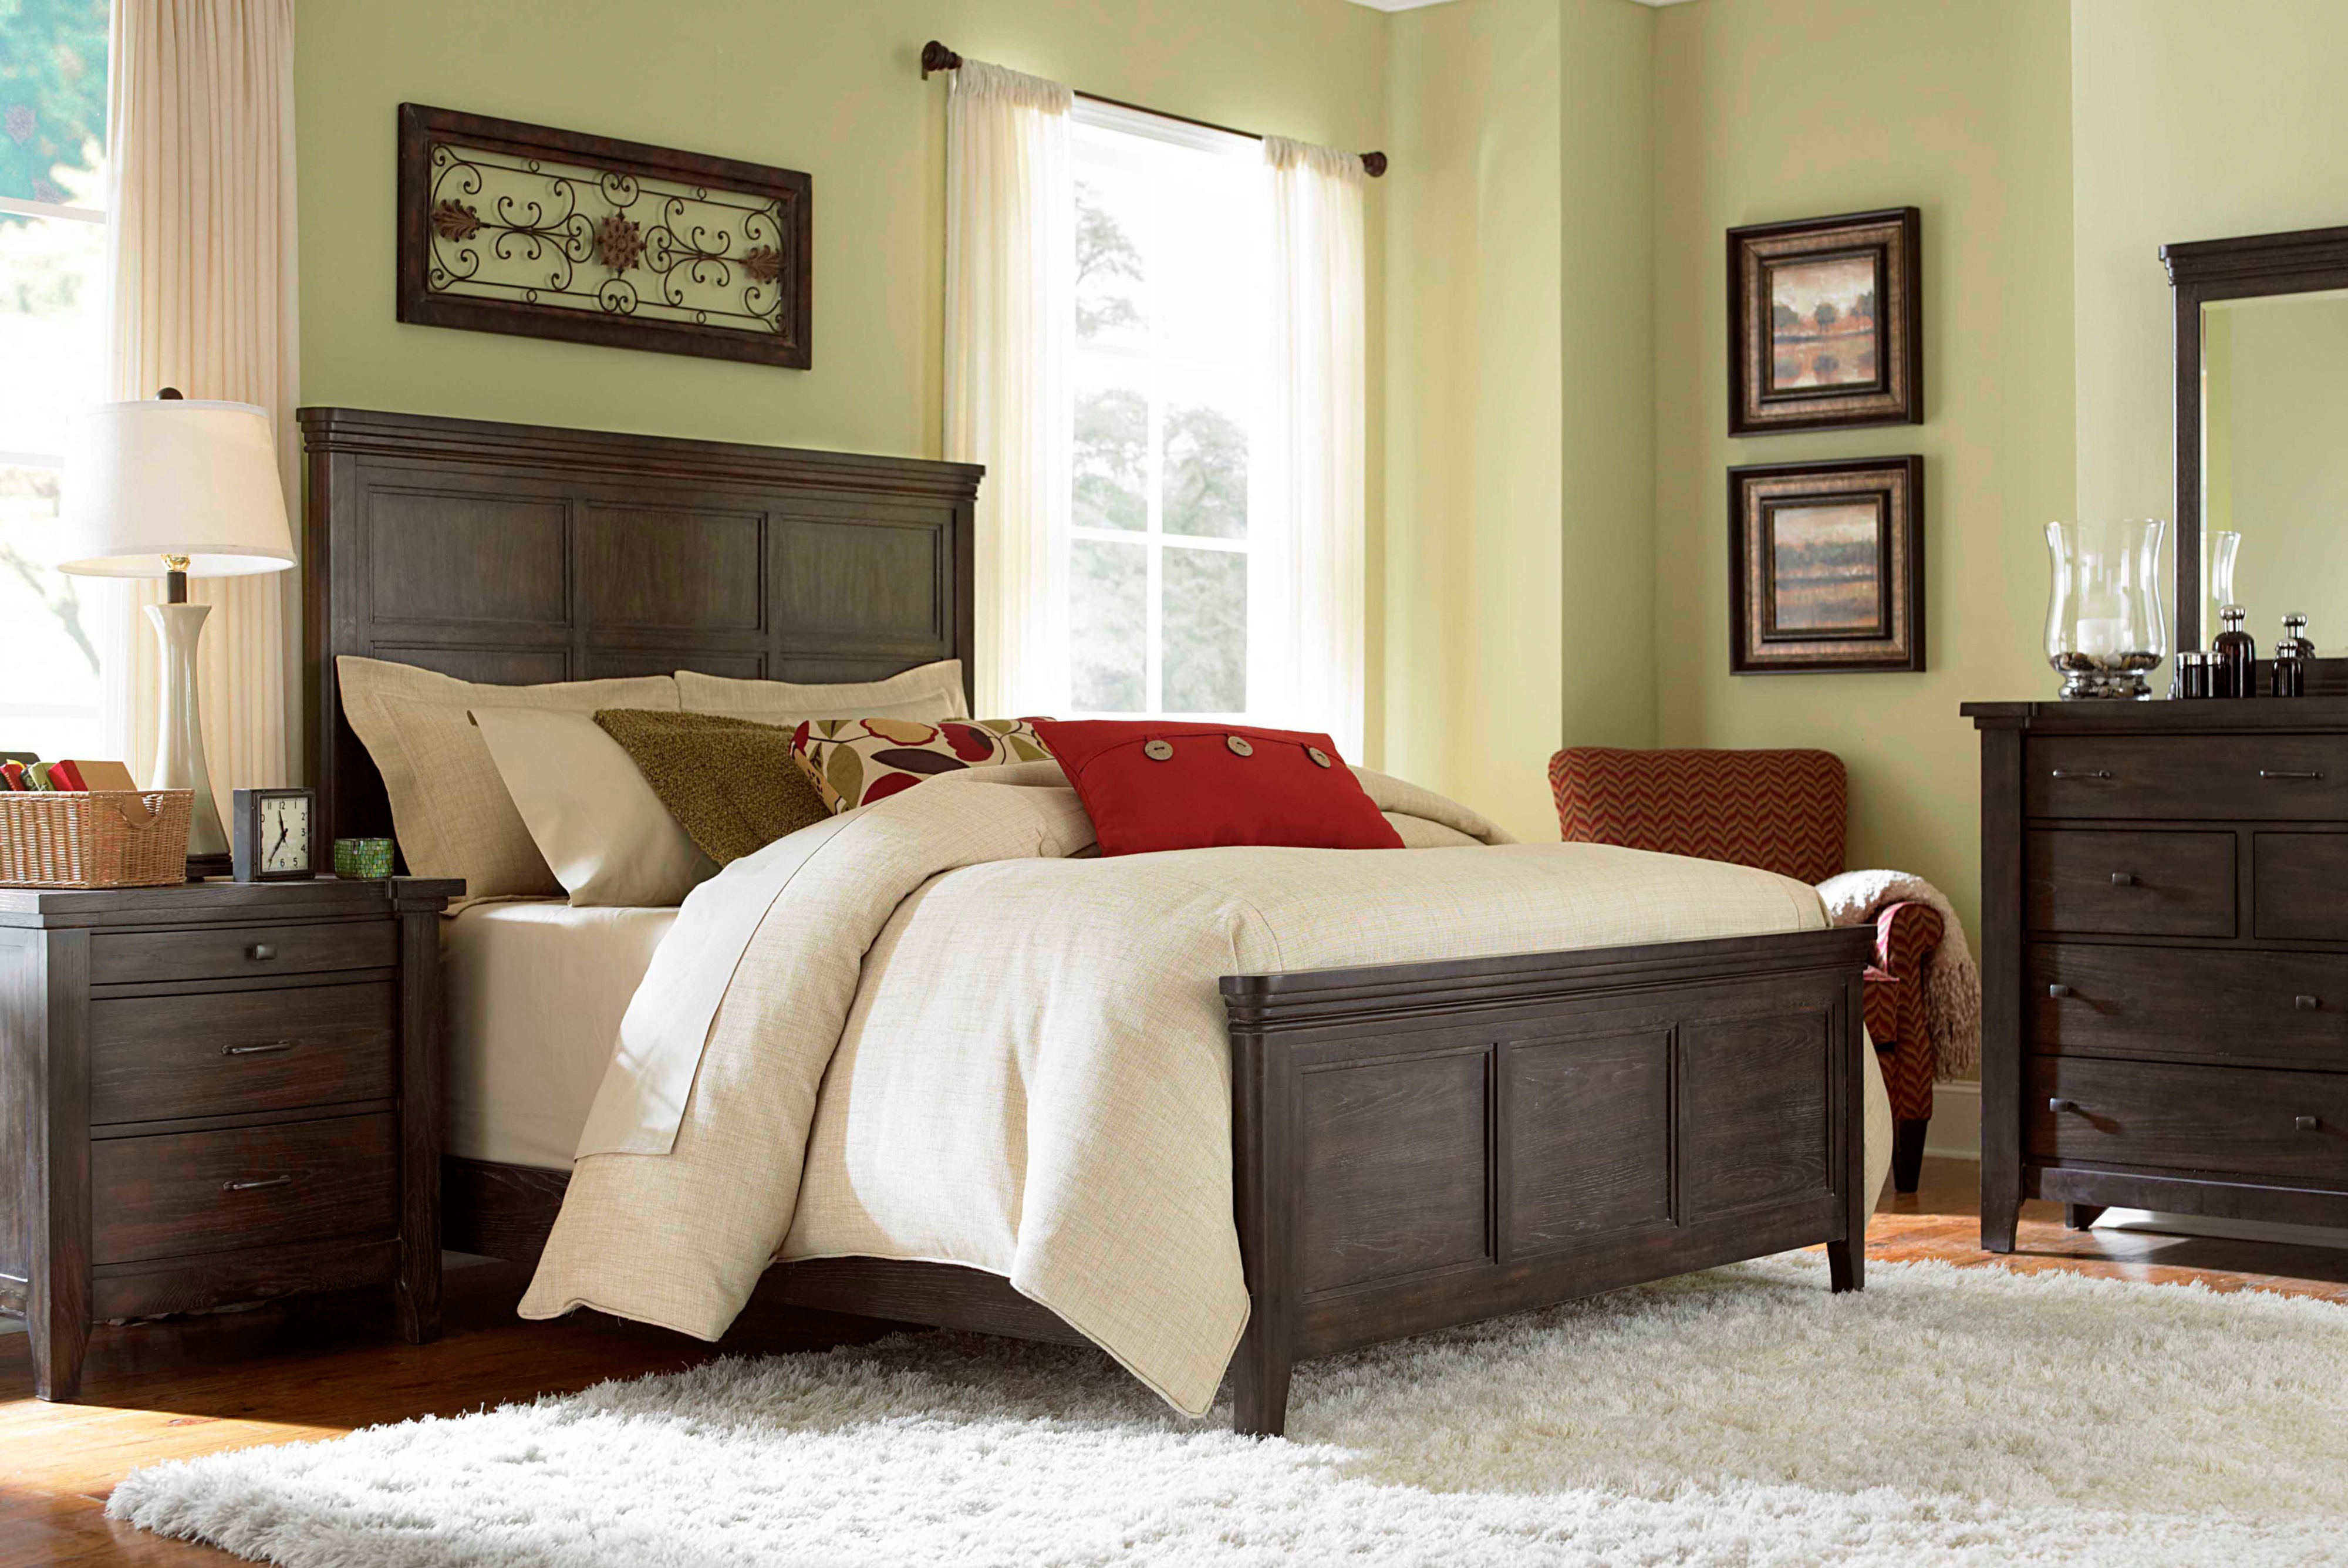 broyhill bedroom furniture broyhill bedroom | broyhill beds | white washed bedroom furniture VQUTCMA